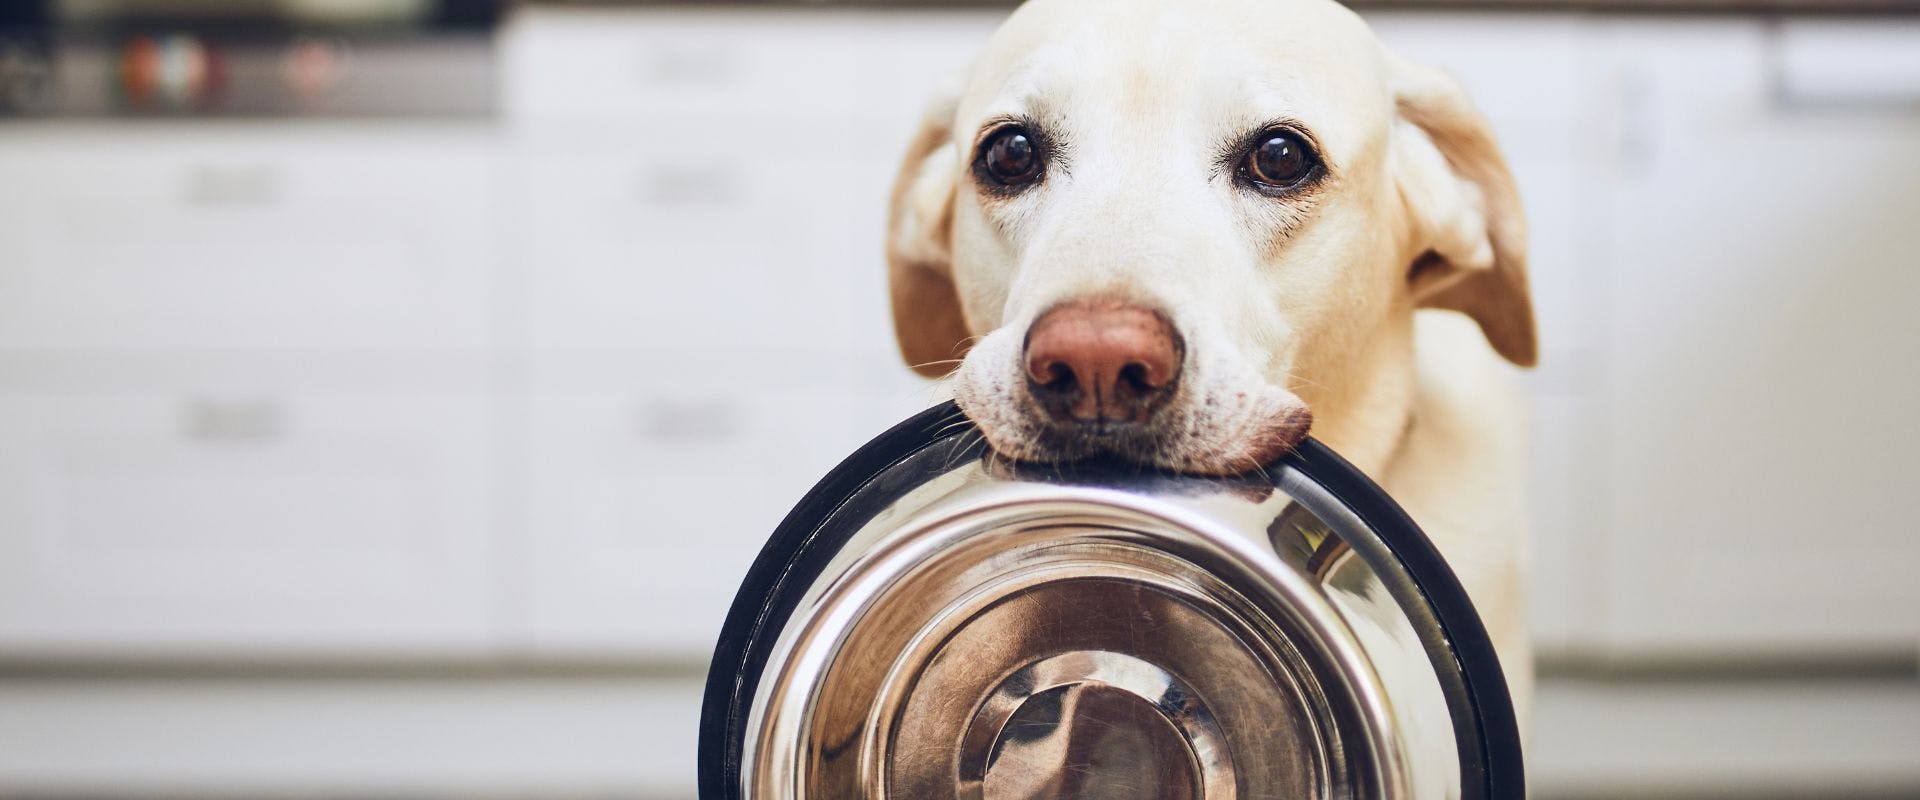 Labrador dog holding metal dog bowl in their mouth